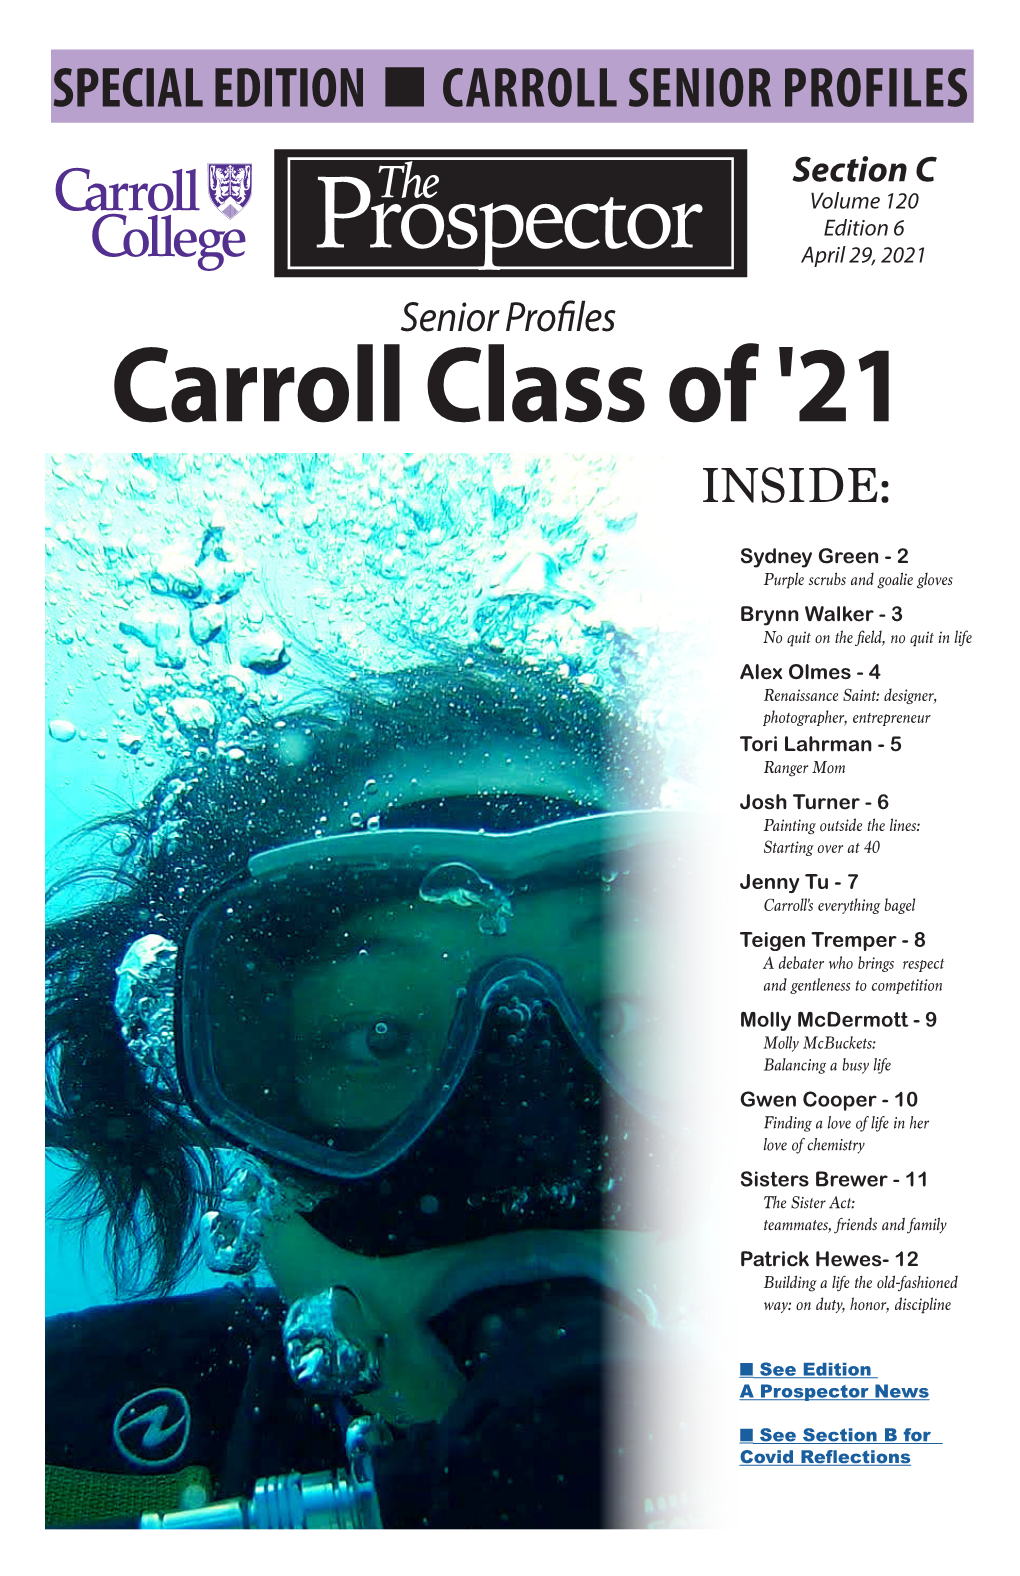 Special Edition Carroll Senior Profiles